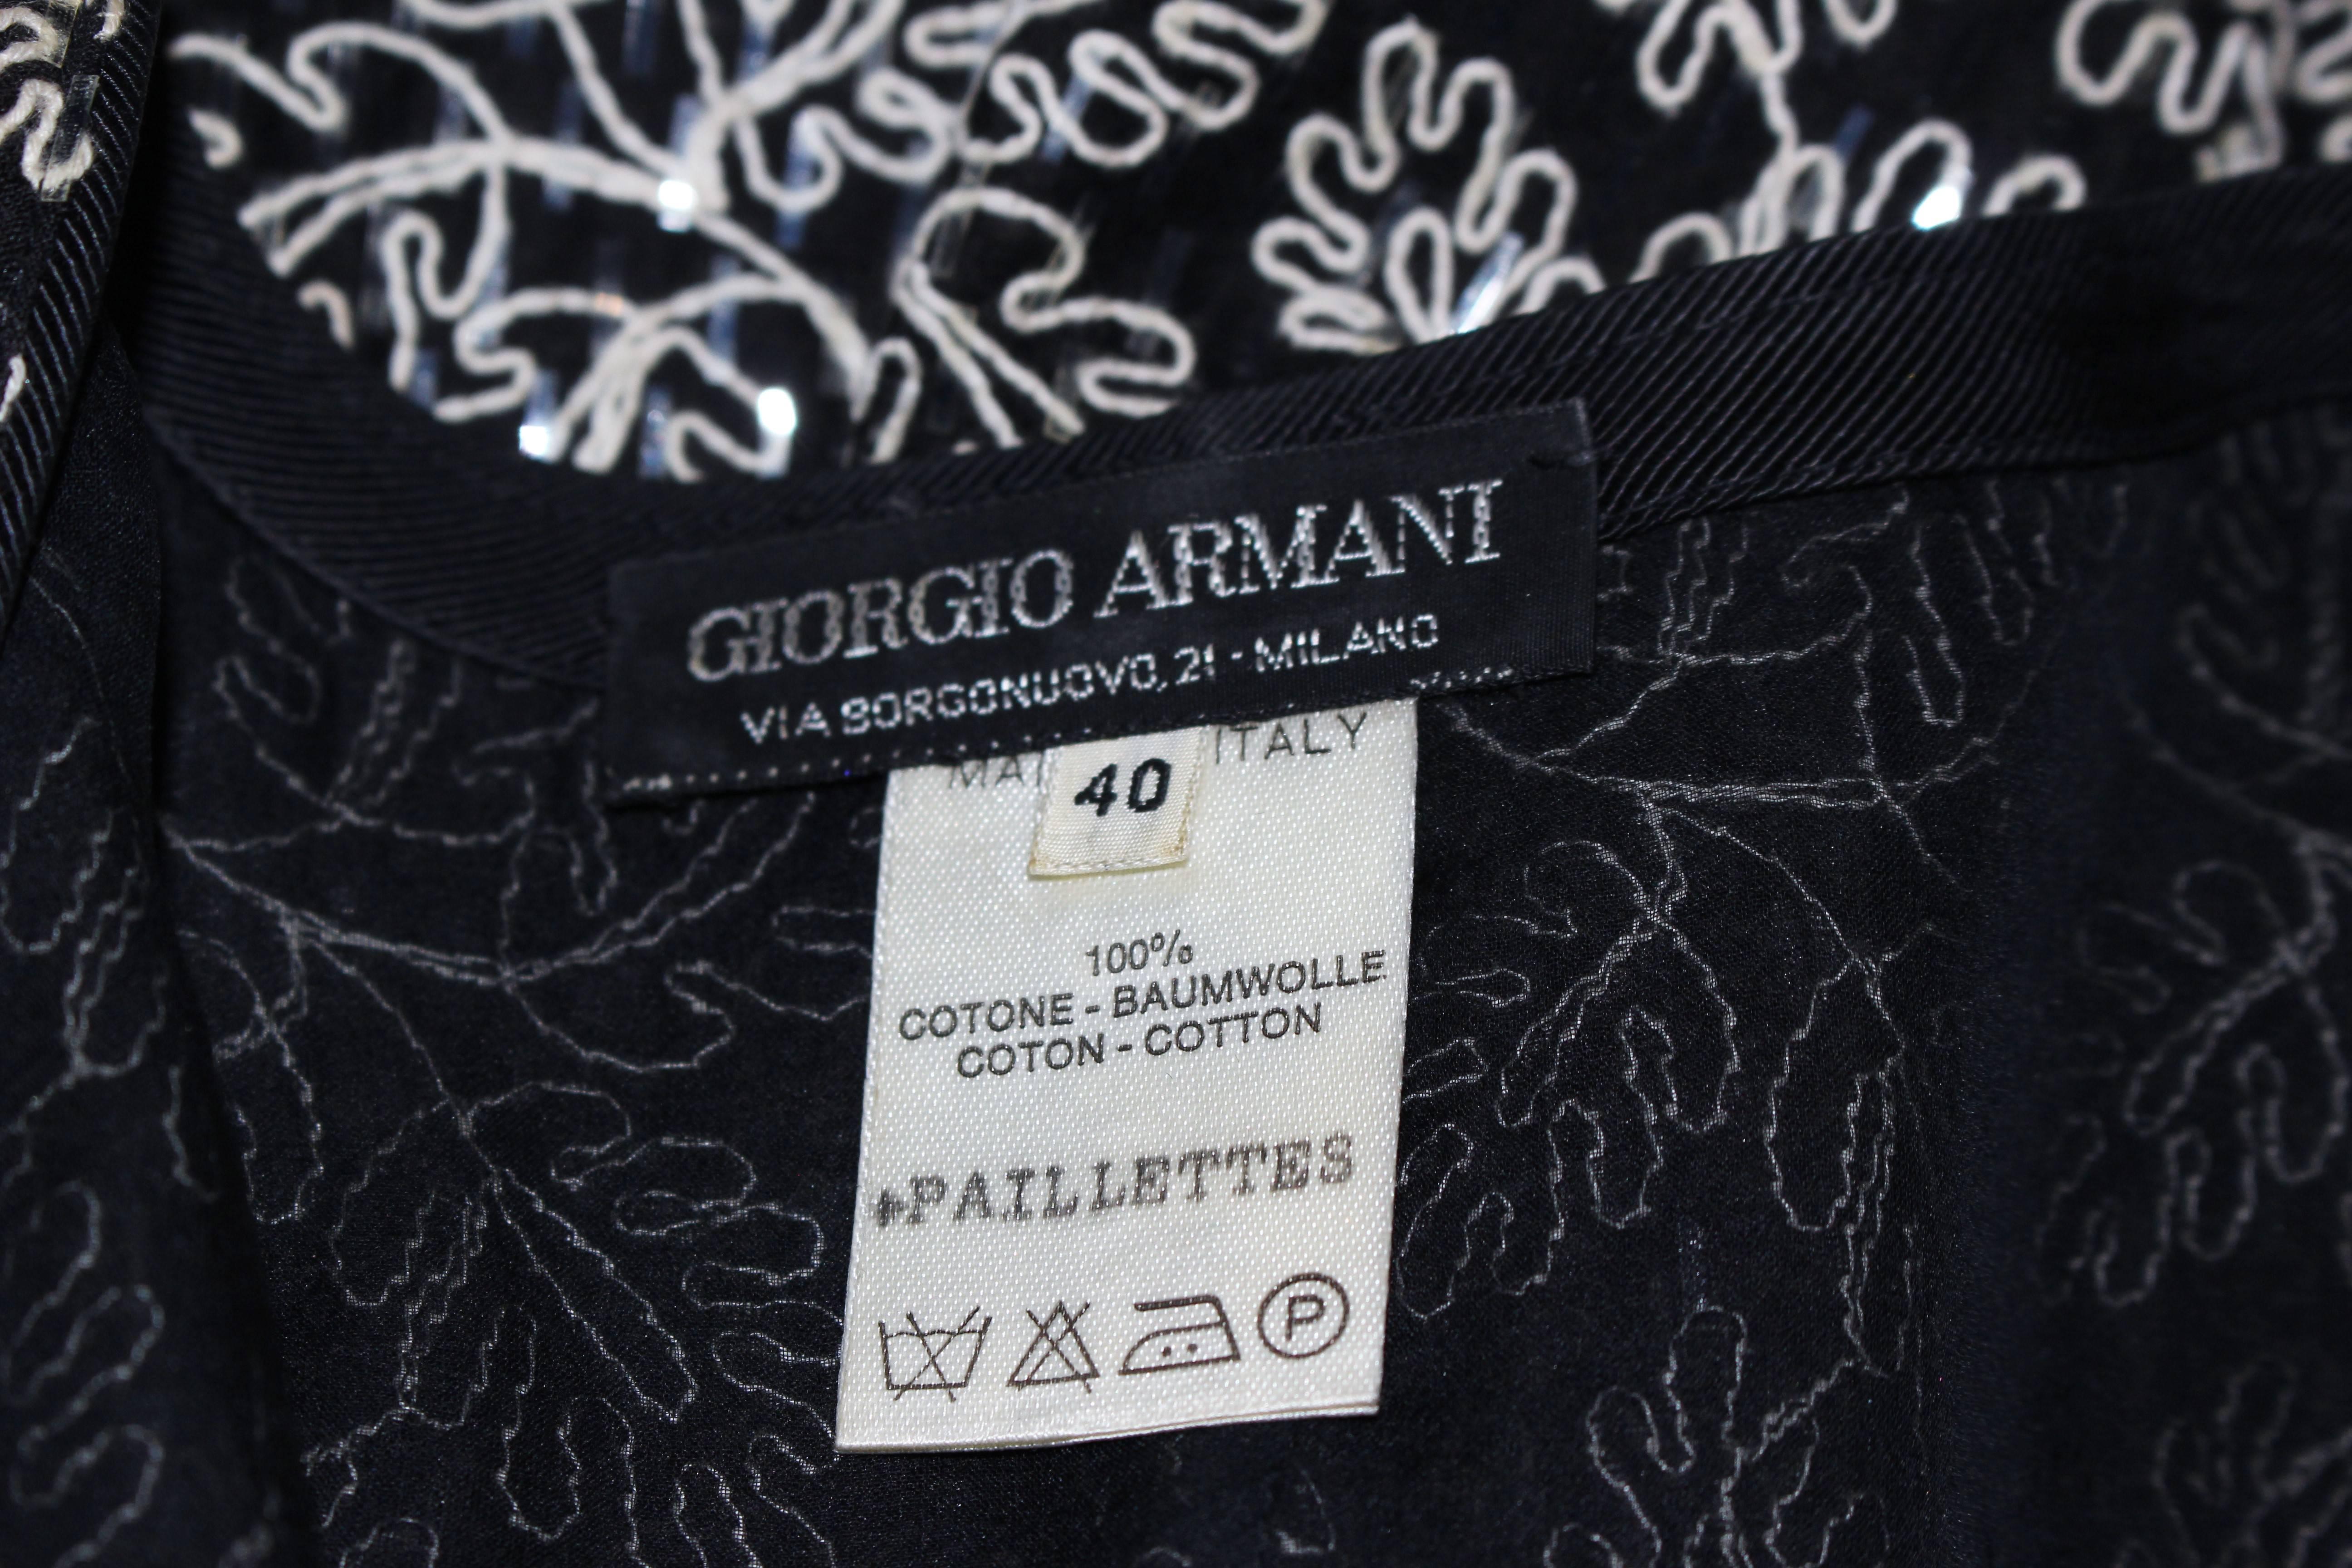 GIORGIO ARMANI Black and White Floral Sequin Jacket Size 40 6